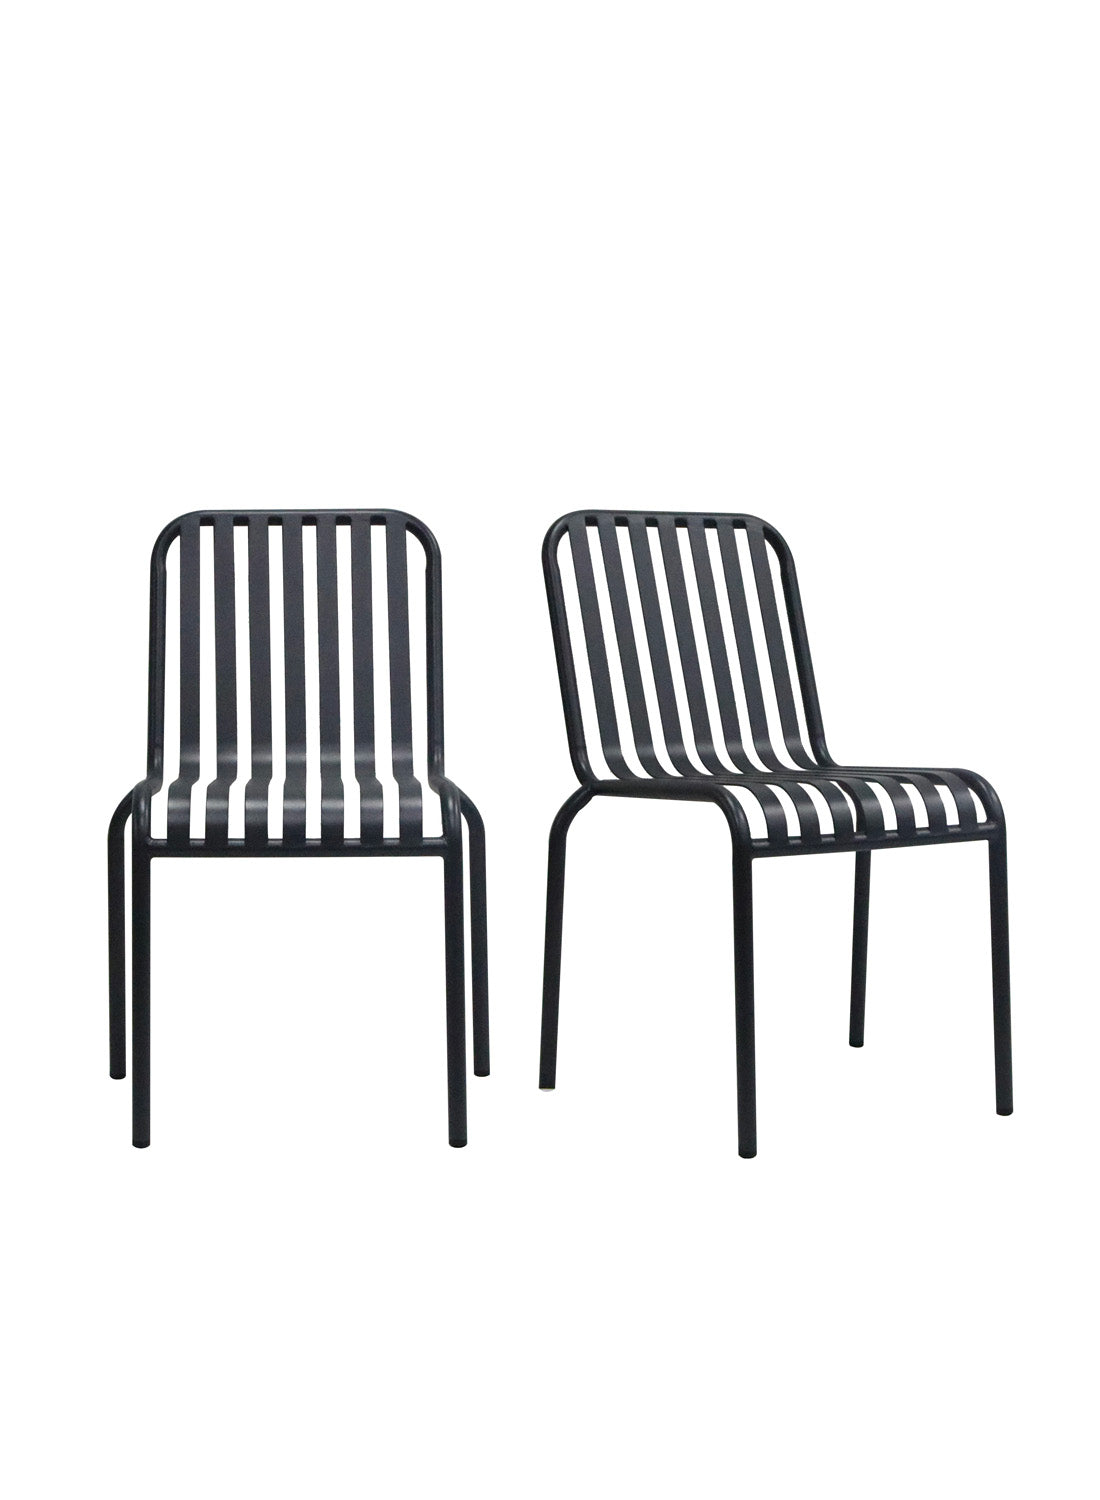 Elara Outdoor Chair, black (set of 2)